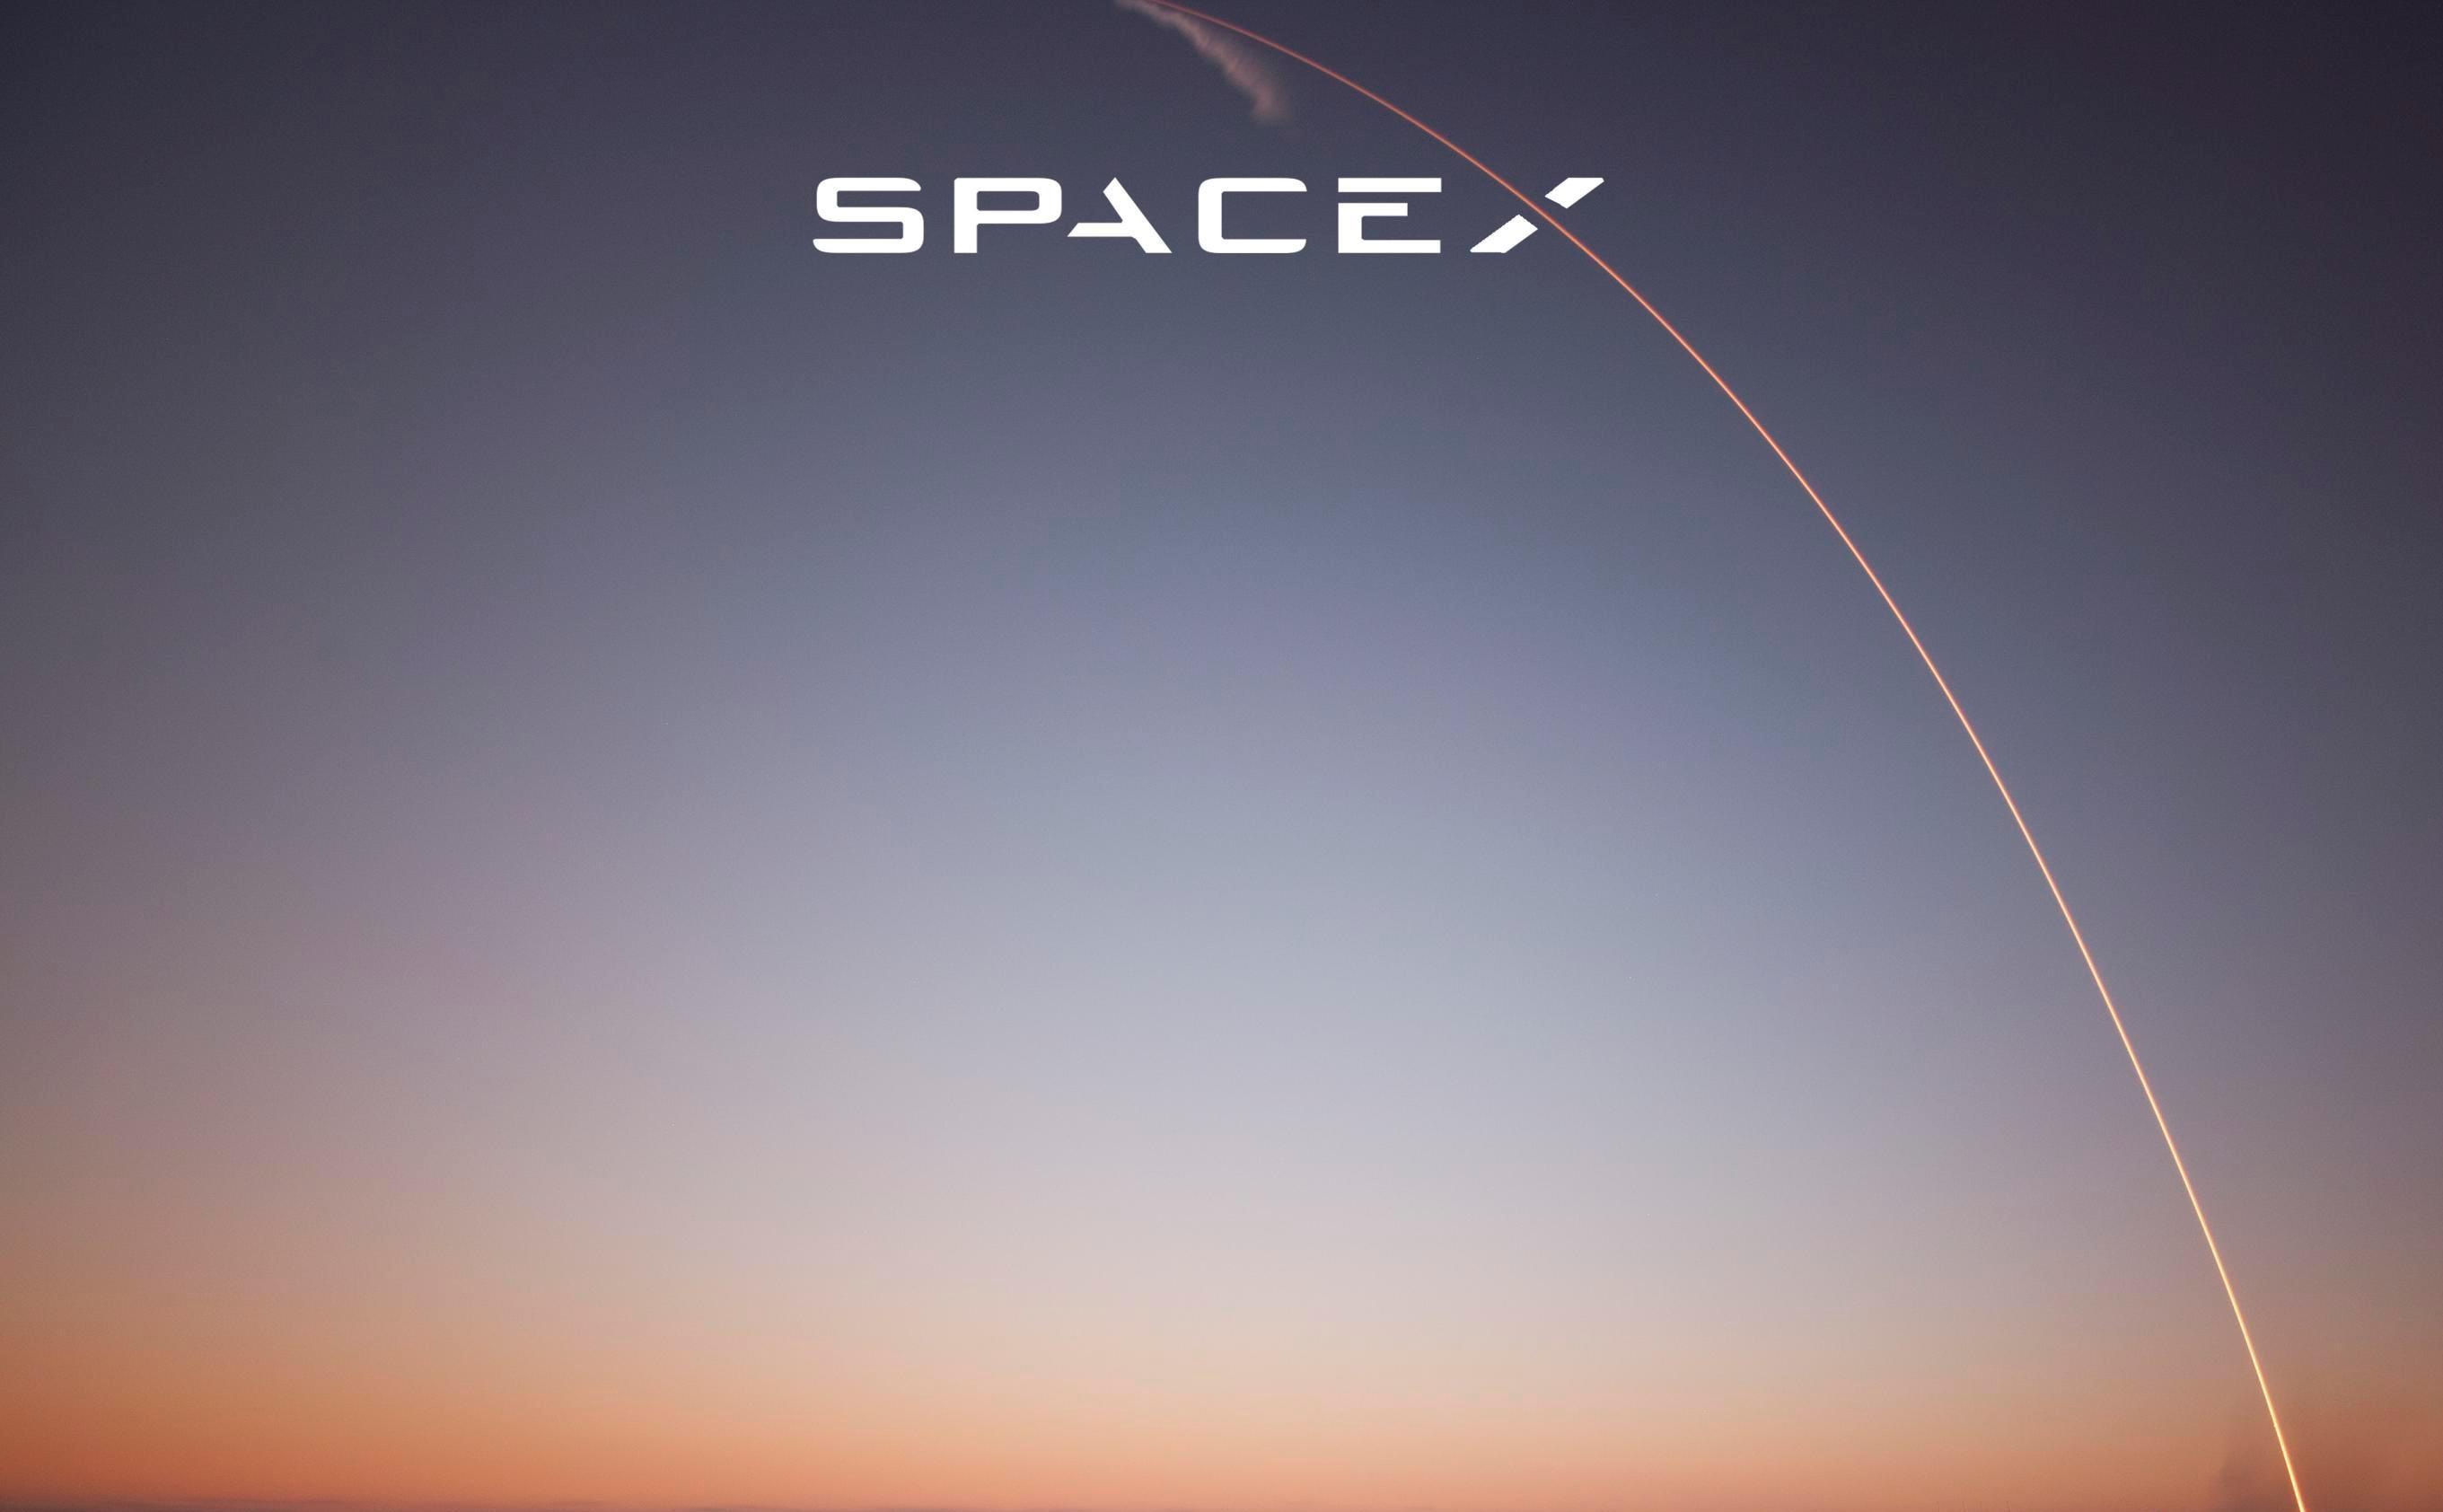 SpaceX Wallpapers HD Free Download  PixelsTalkNet